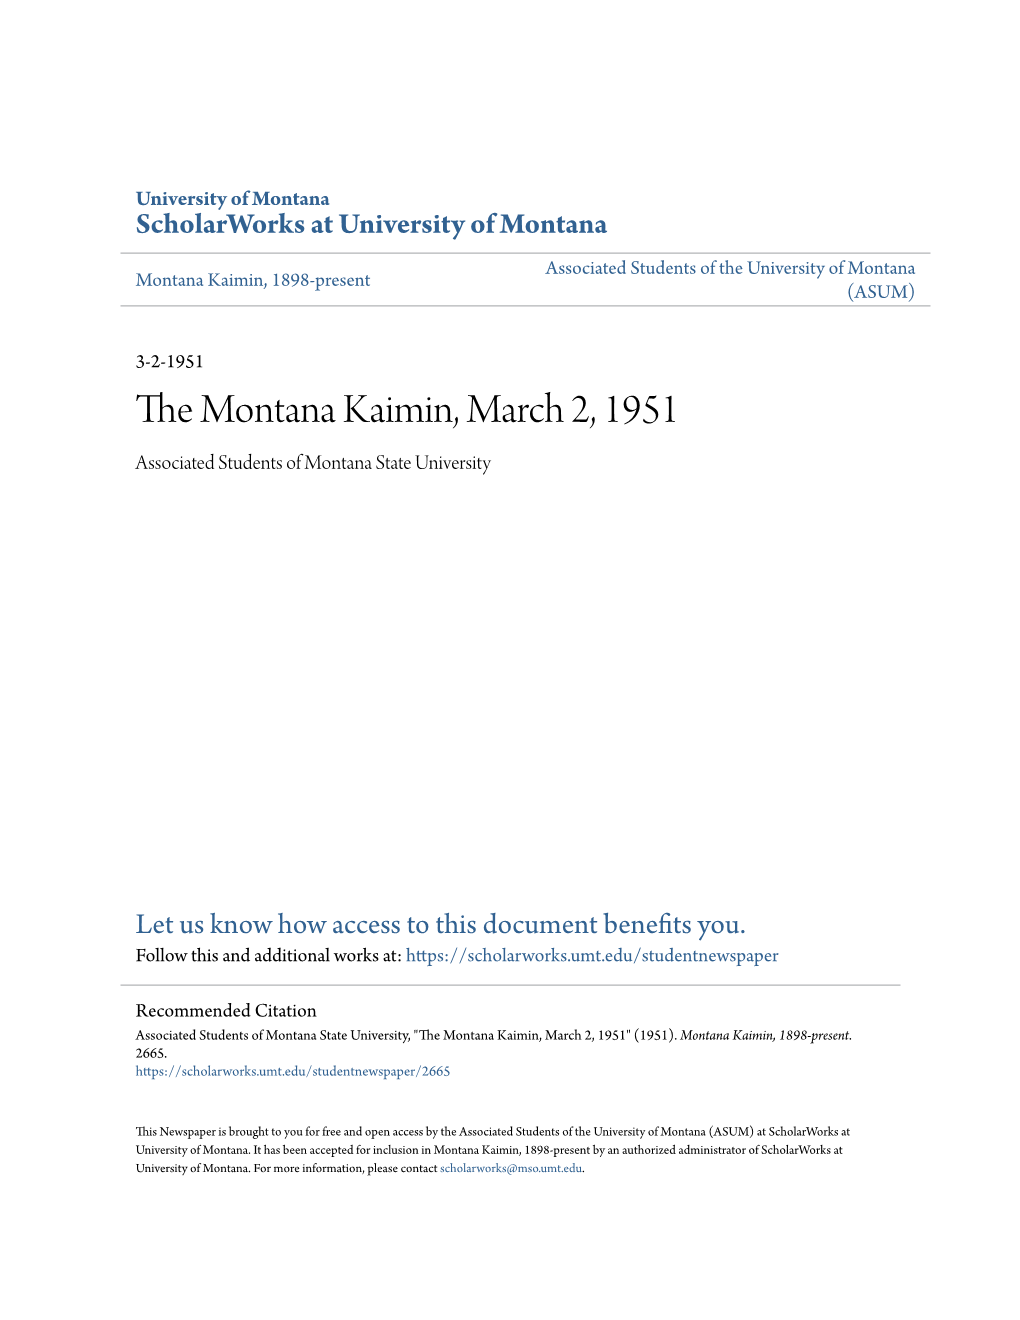 The Montana Kaimin, March 2, 1951